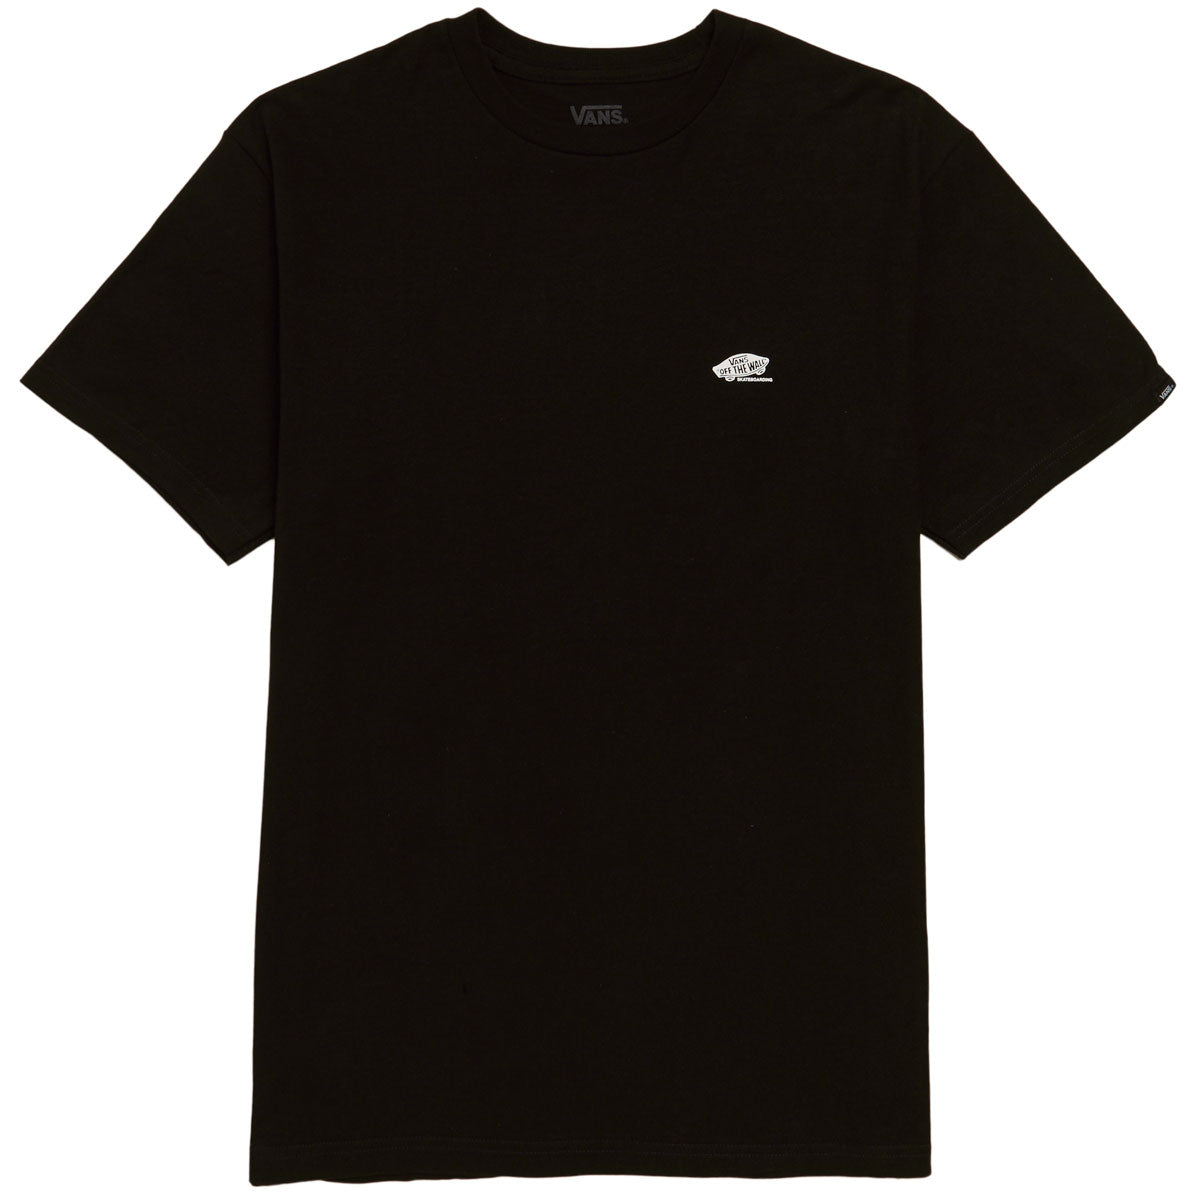 Vans Skate Classics T-Shirt - Black image 1